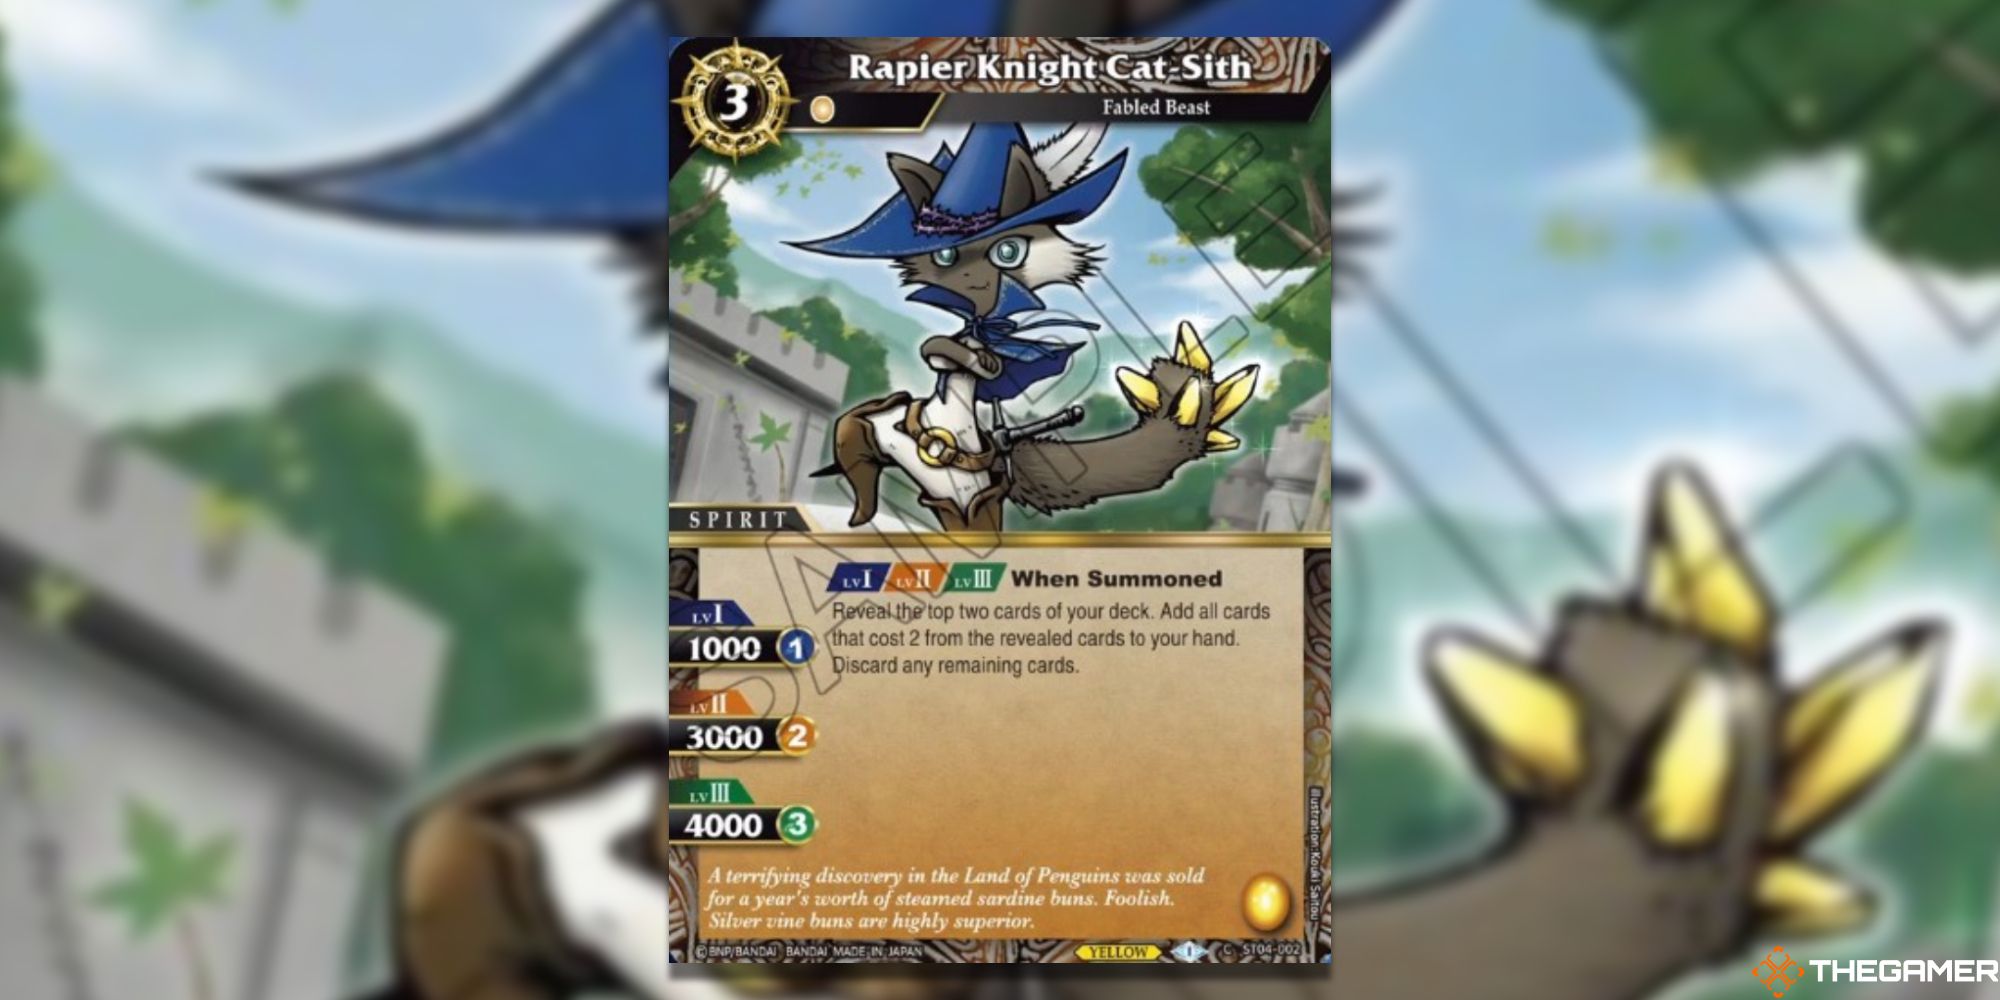 Rapier Knight Cat Sith Card from Battle Spirits Saga